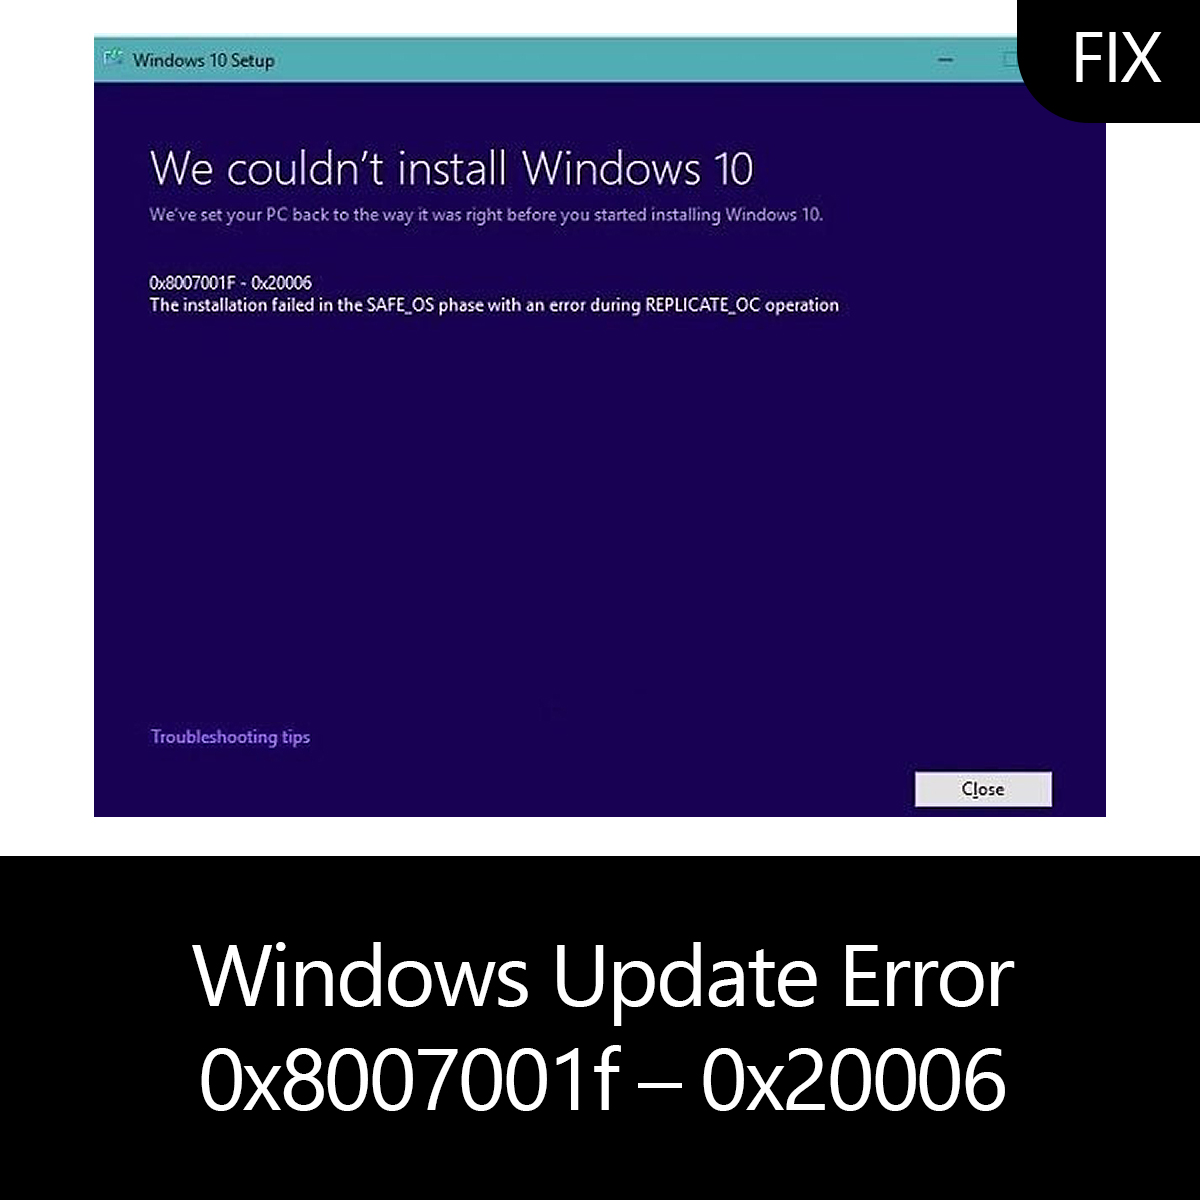 windows update error code 0x8007001f